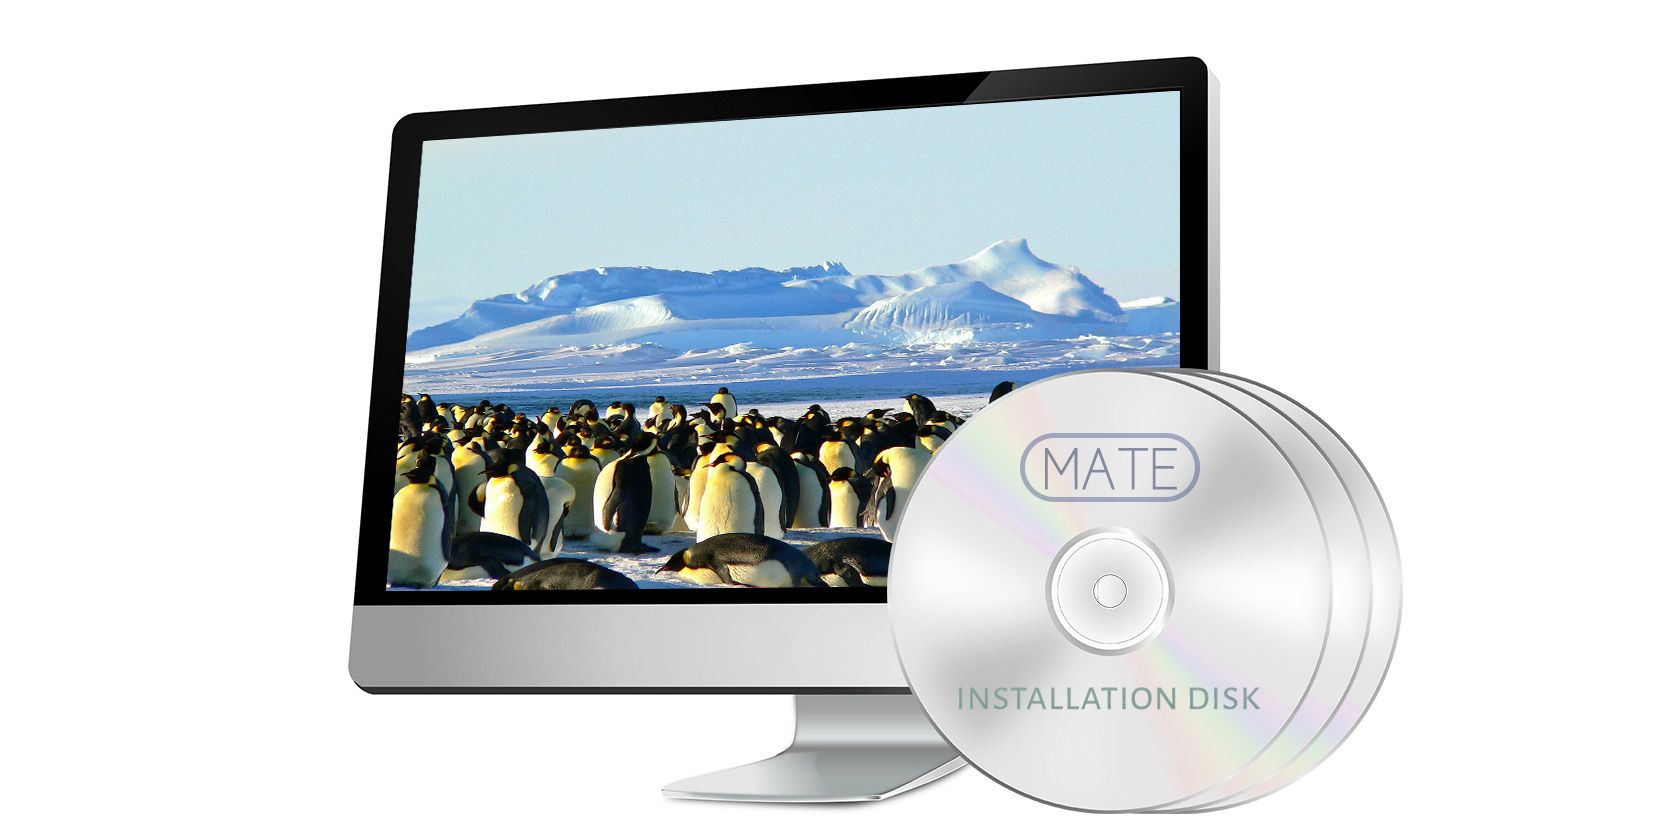 download rocky linux 9 install mate desktop